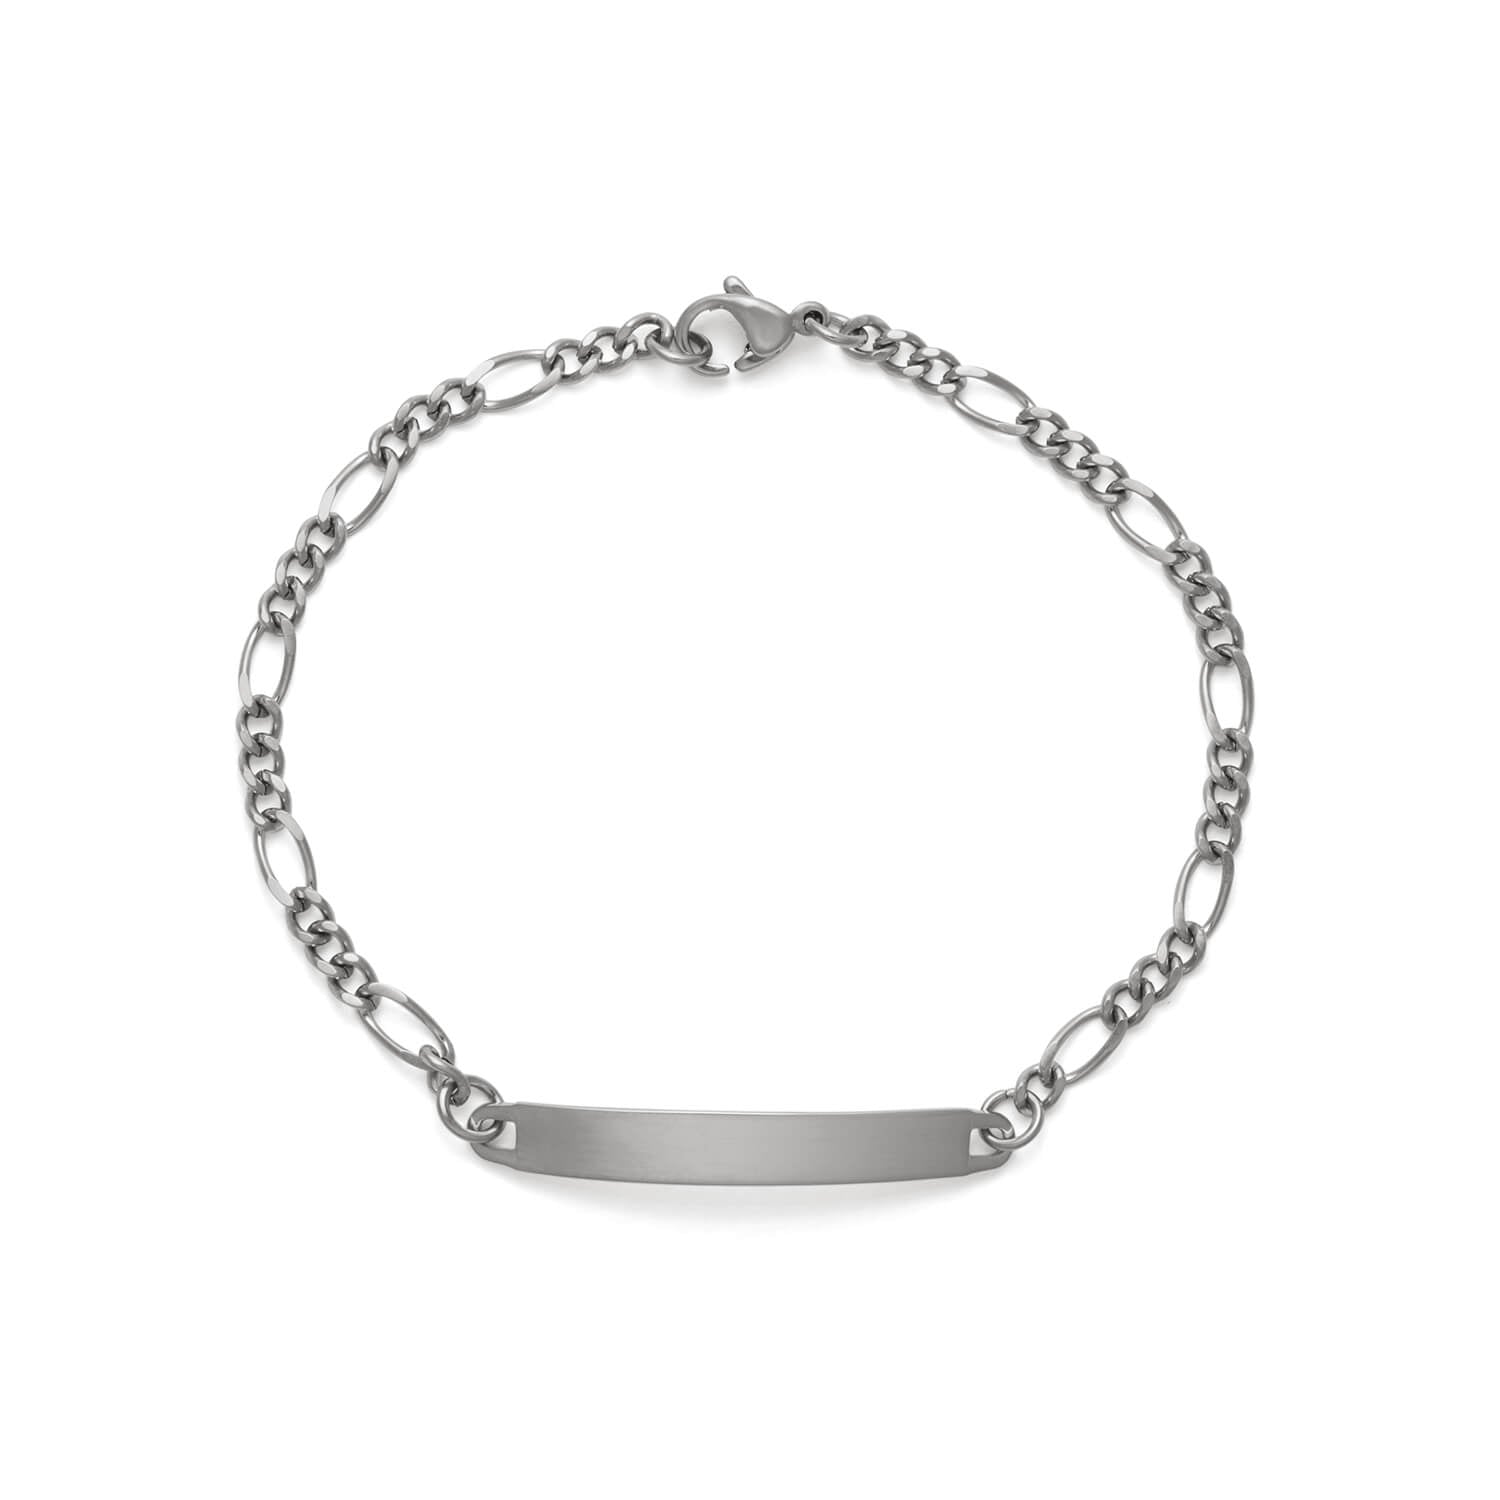 Buy American Diamond Silver Bracelet